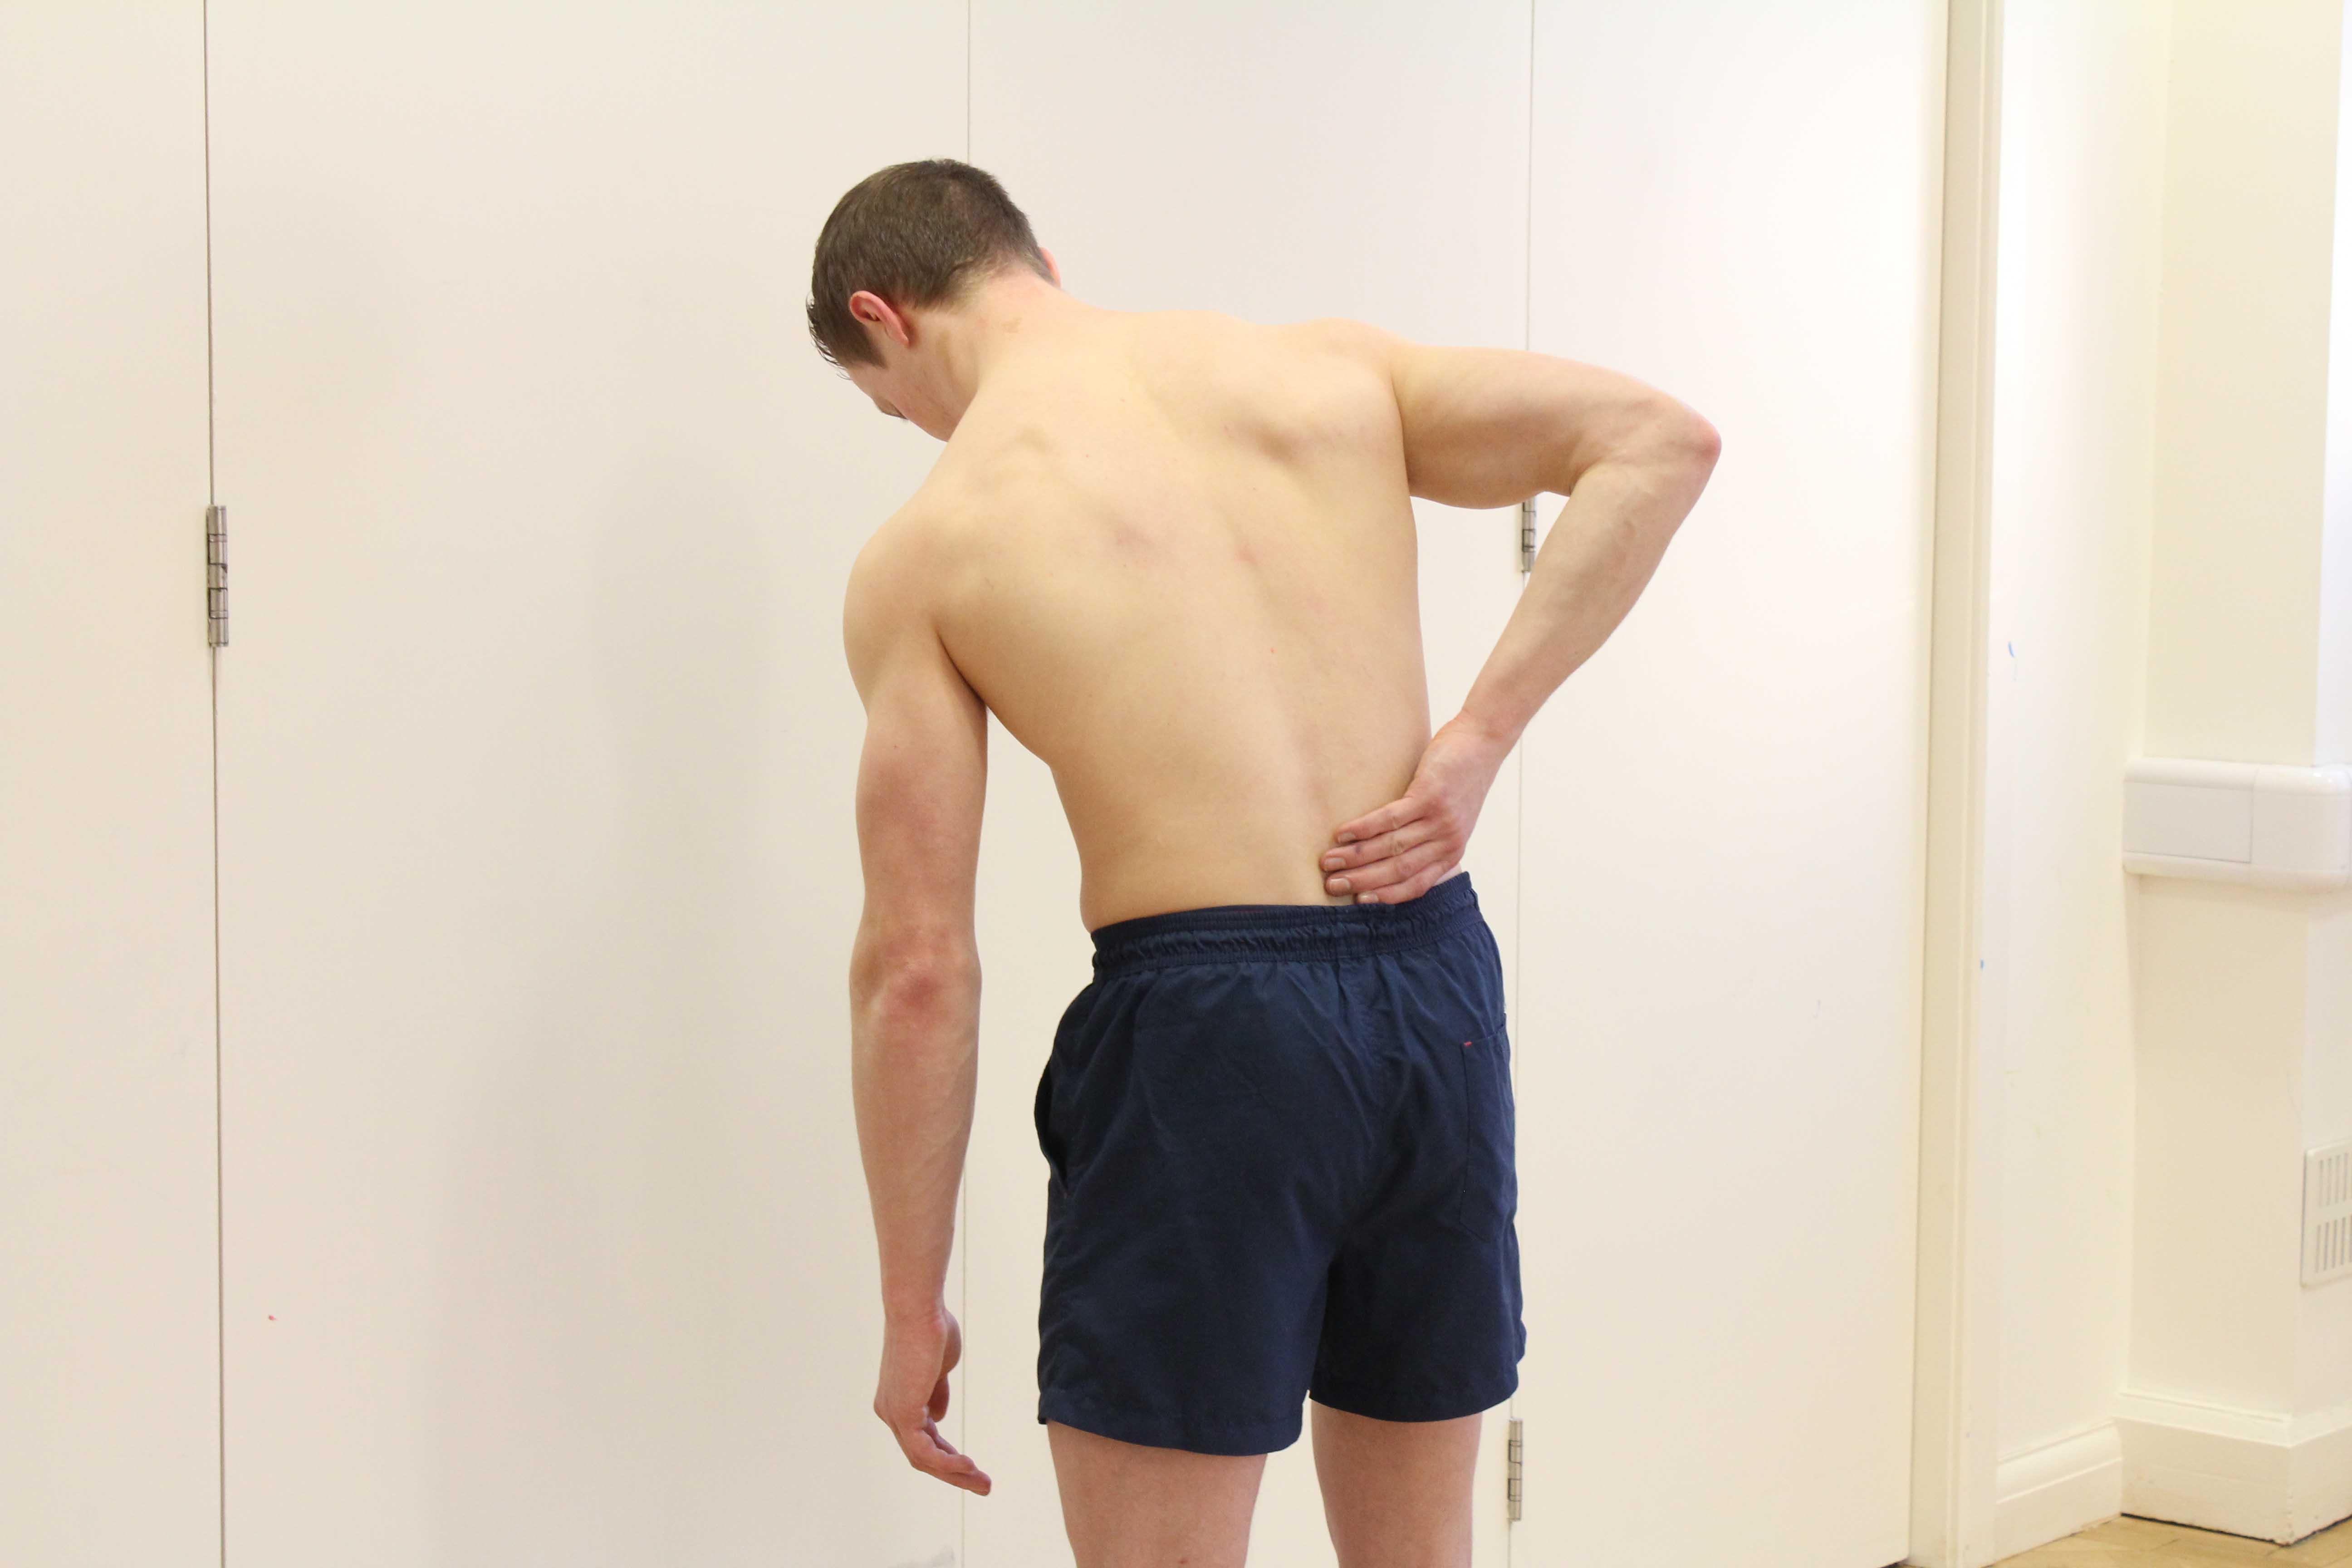 Debilatating lower back disc pain